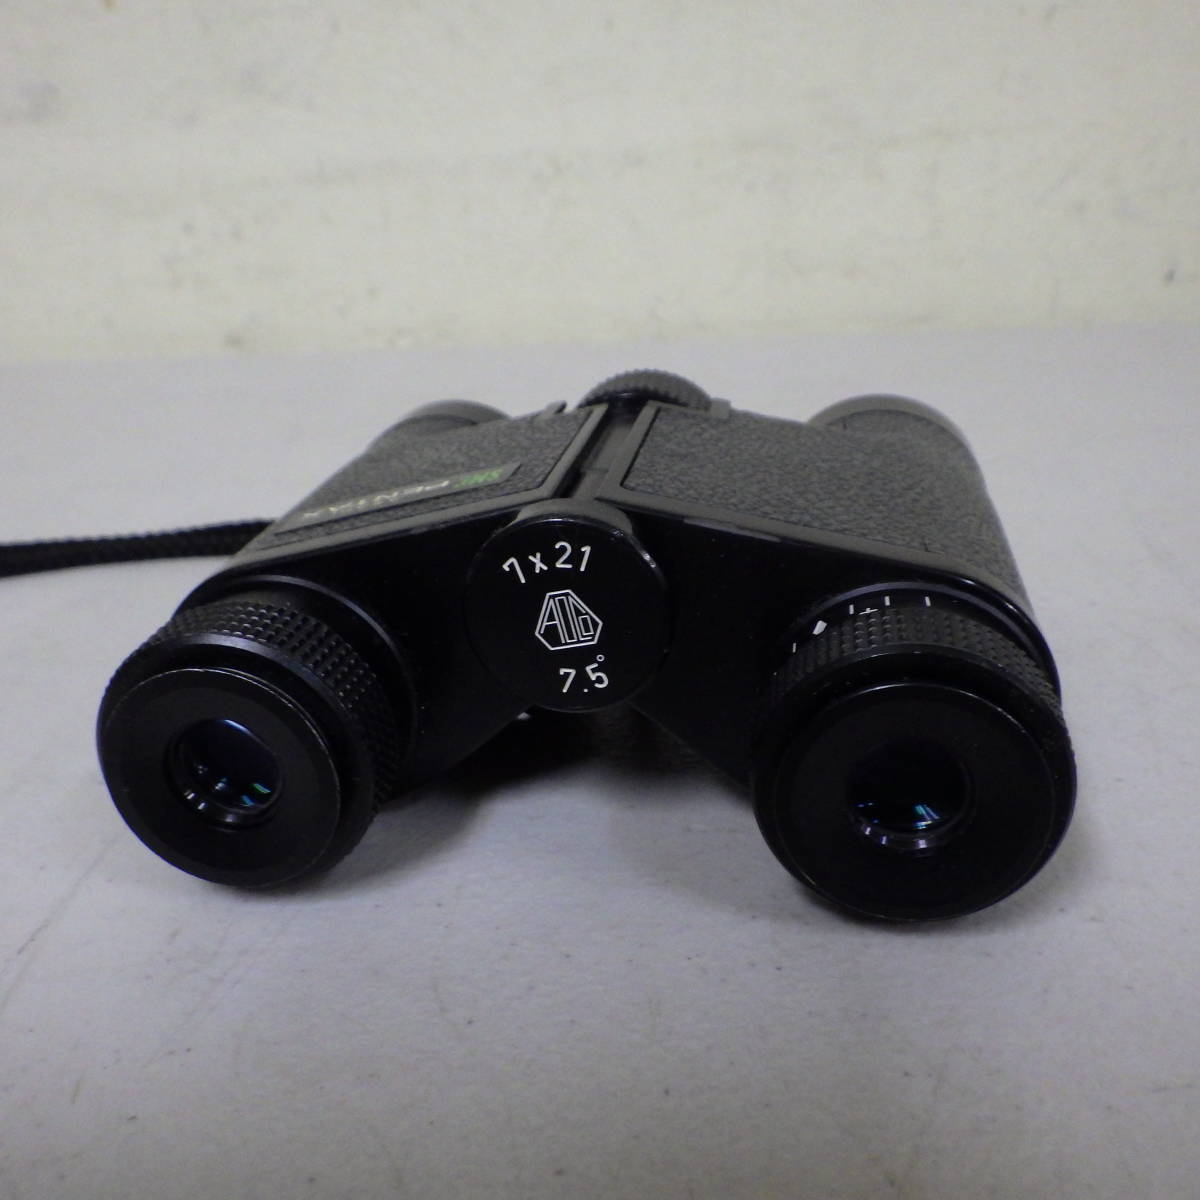 SMC ASAHI PENTAX Asahi Pentax binoculars 7×21 7.5°